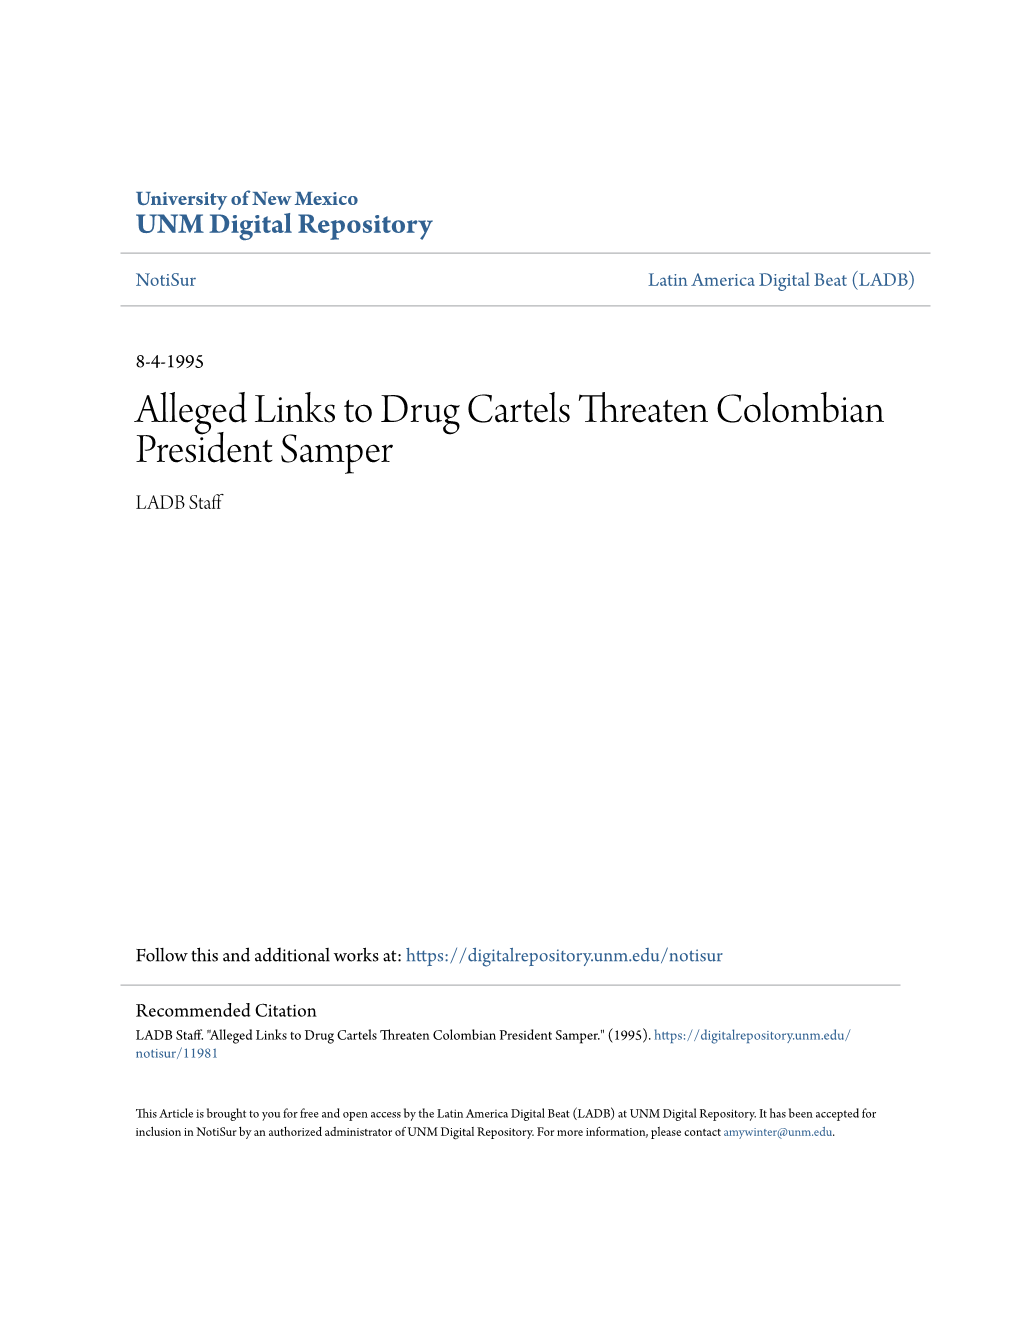 Alleged Links to Drug Cartels Threaten Colombian President Samper LADB Staff